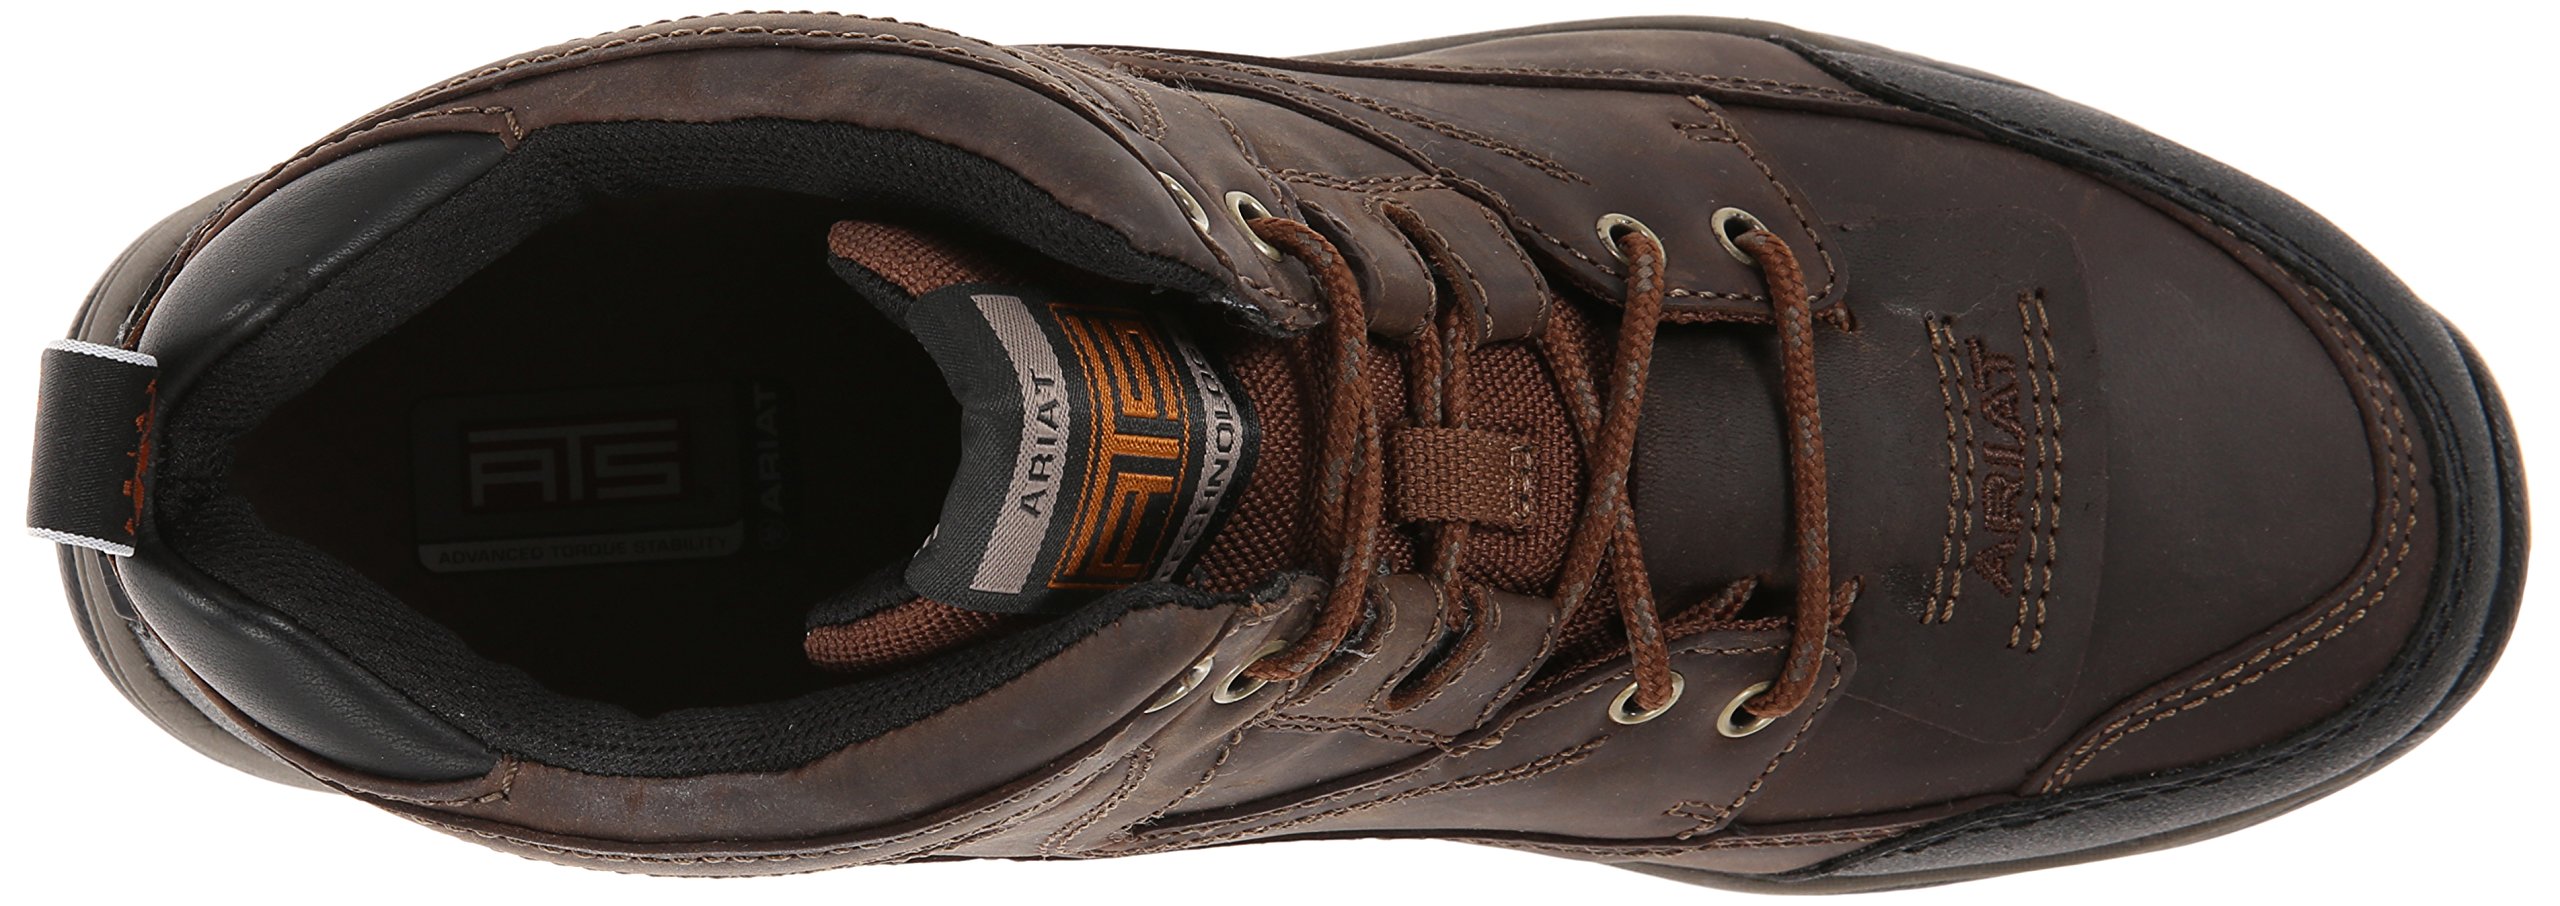 Ariat Men's Terrain Leather Outdoor Hiking Boots